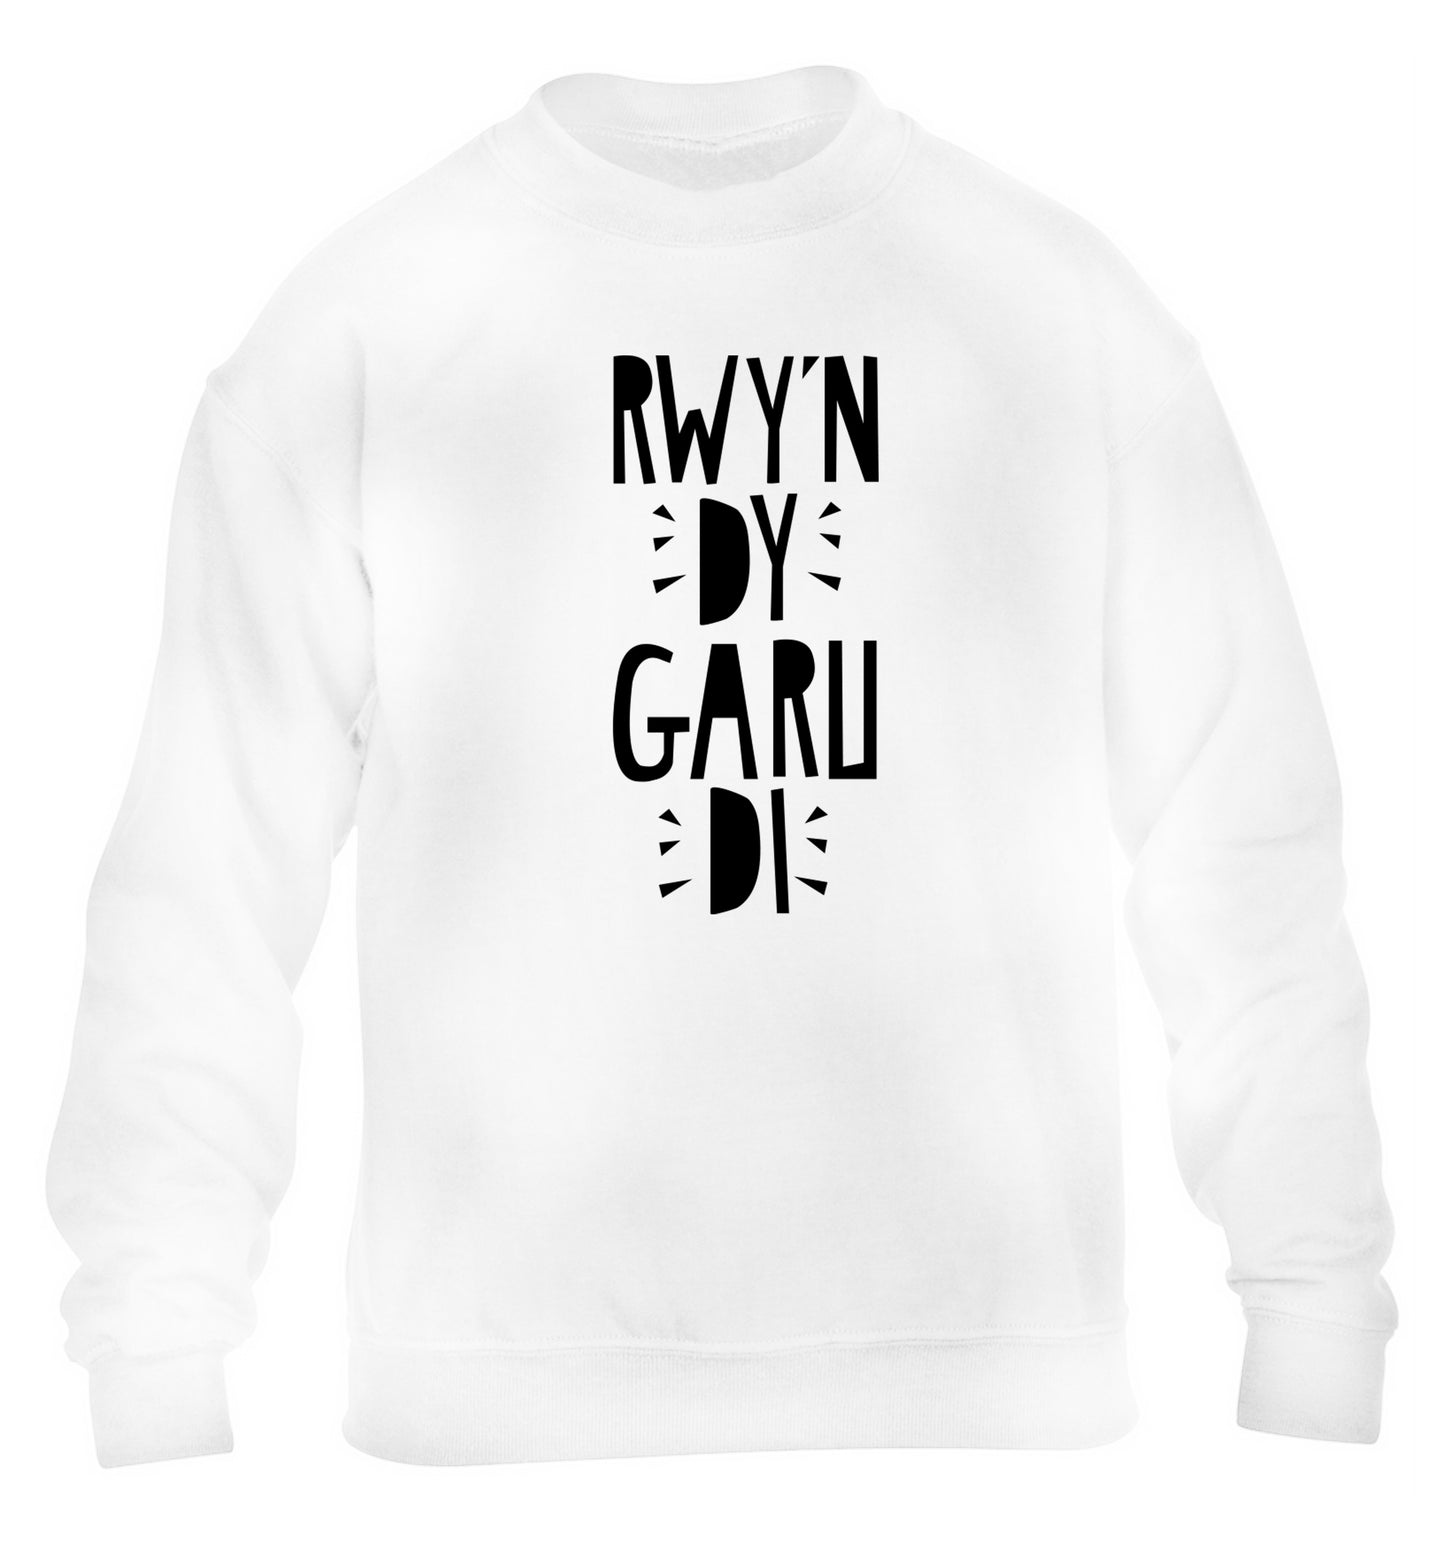 Rwy'n dy garu di - I love you children's white sweater 12-13 Years